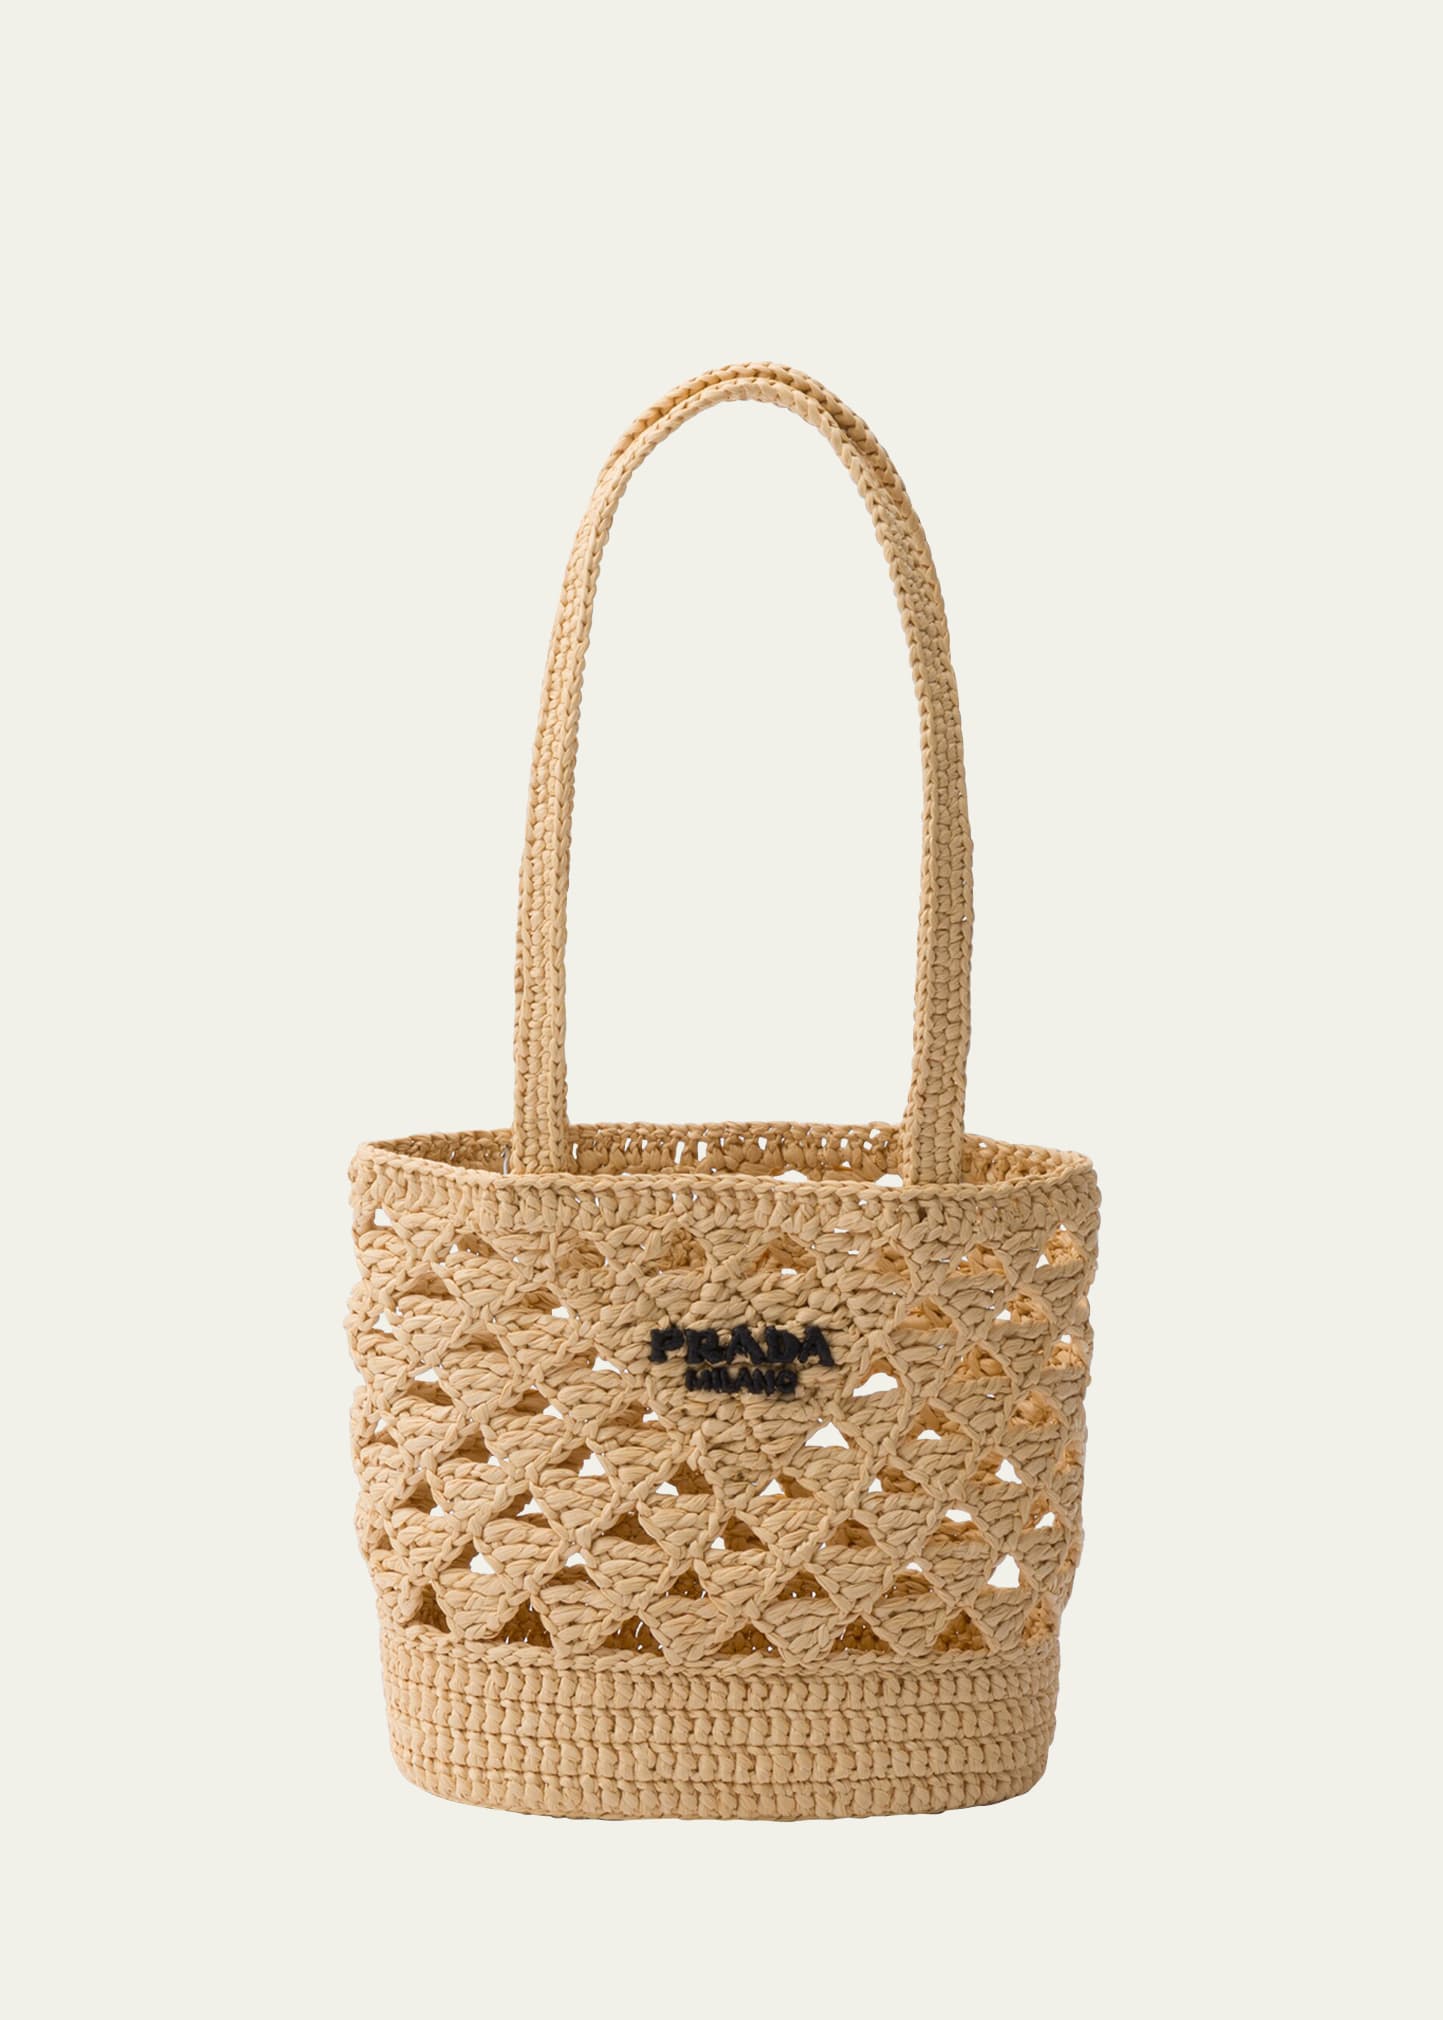 Prada Women's Woven Fabric Crochet Shoulder Bag In F0018 Naturale